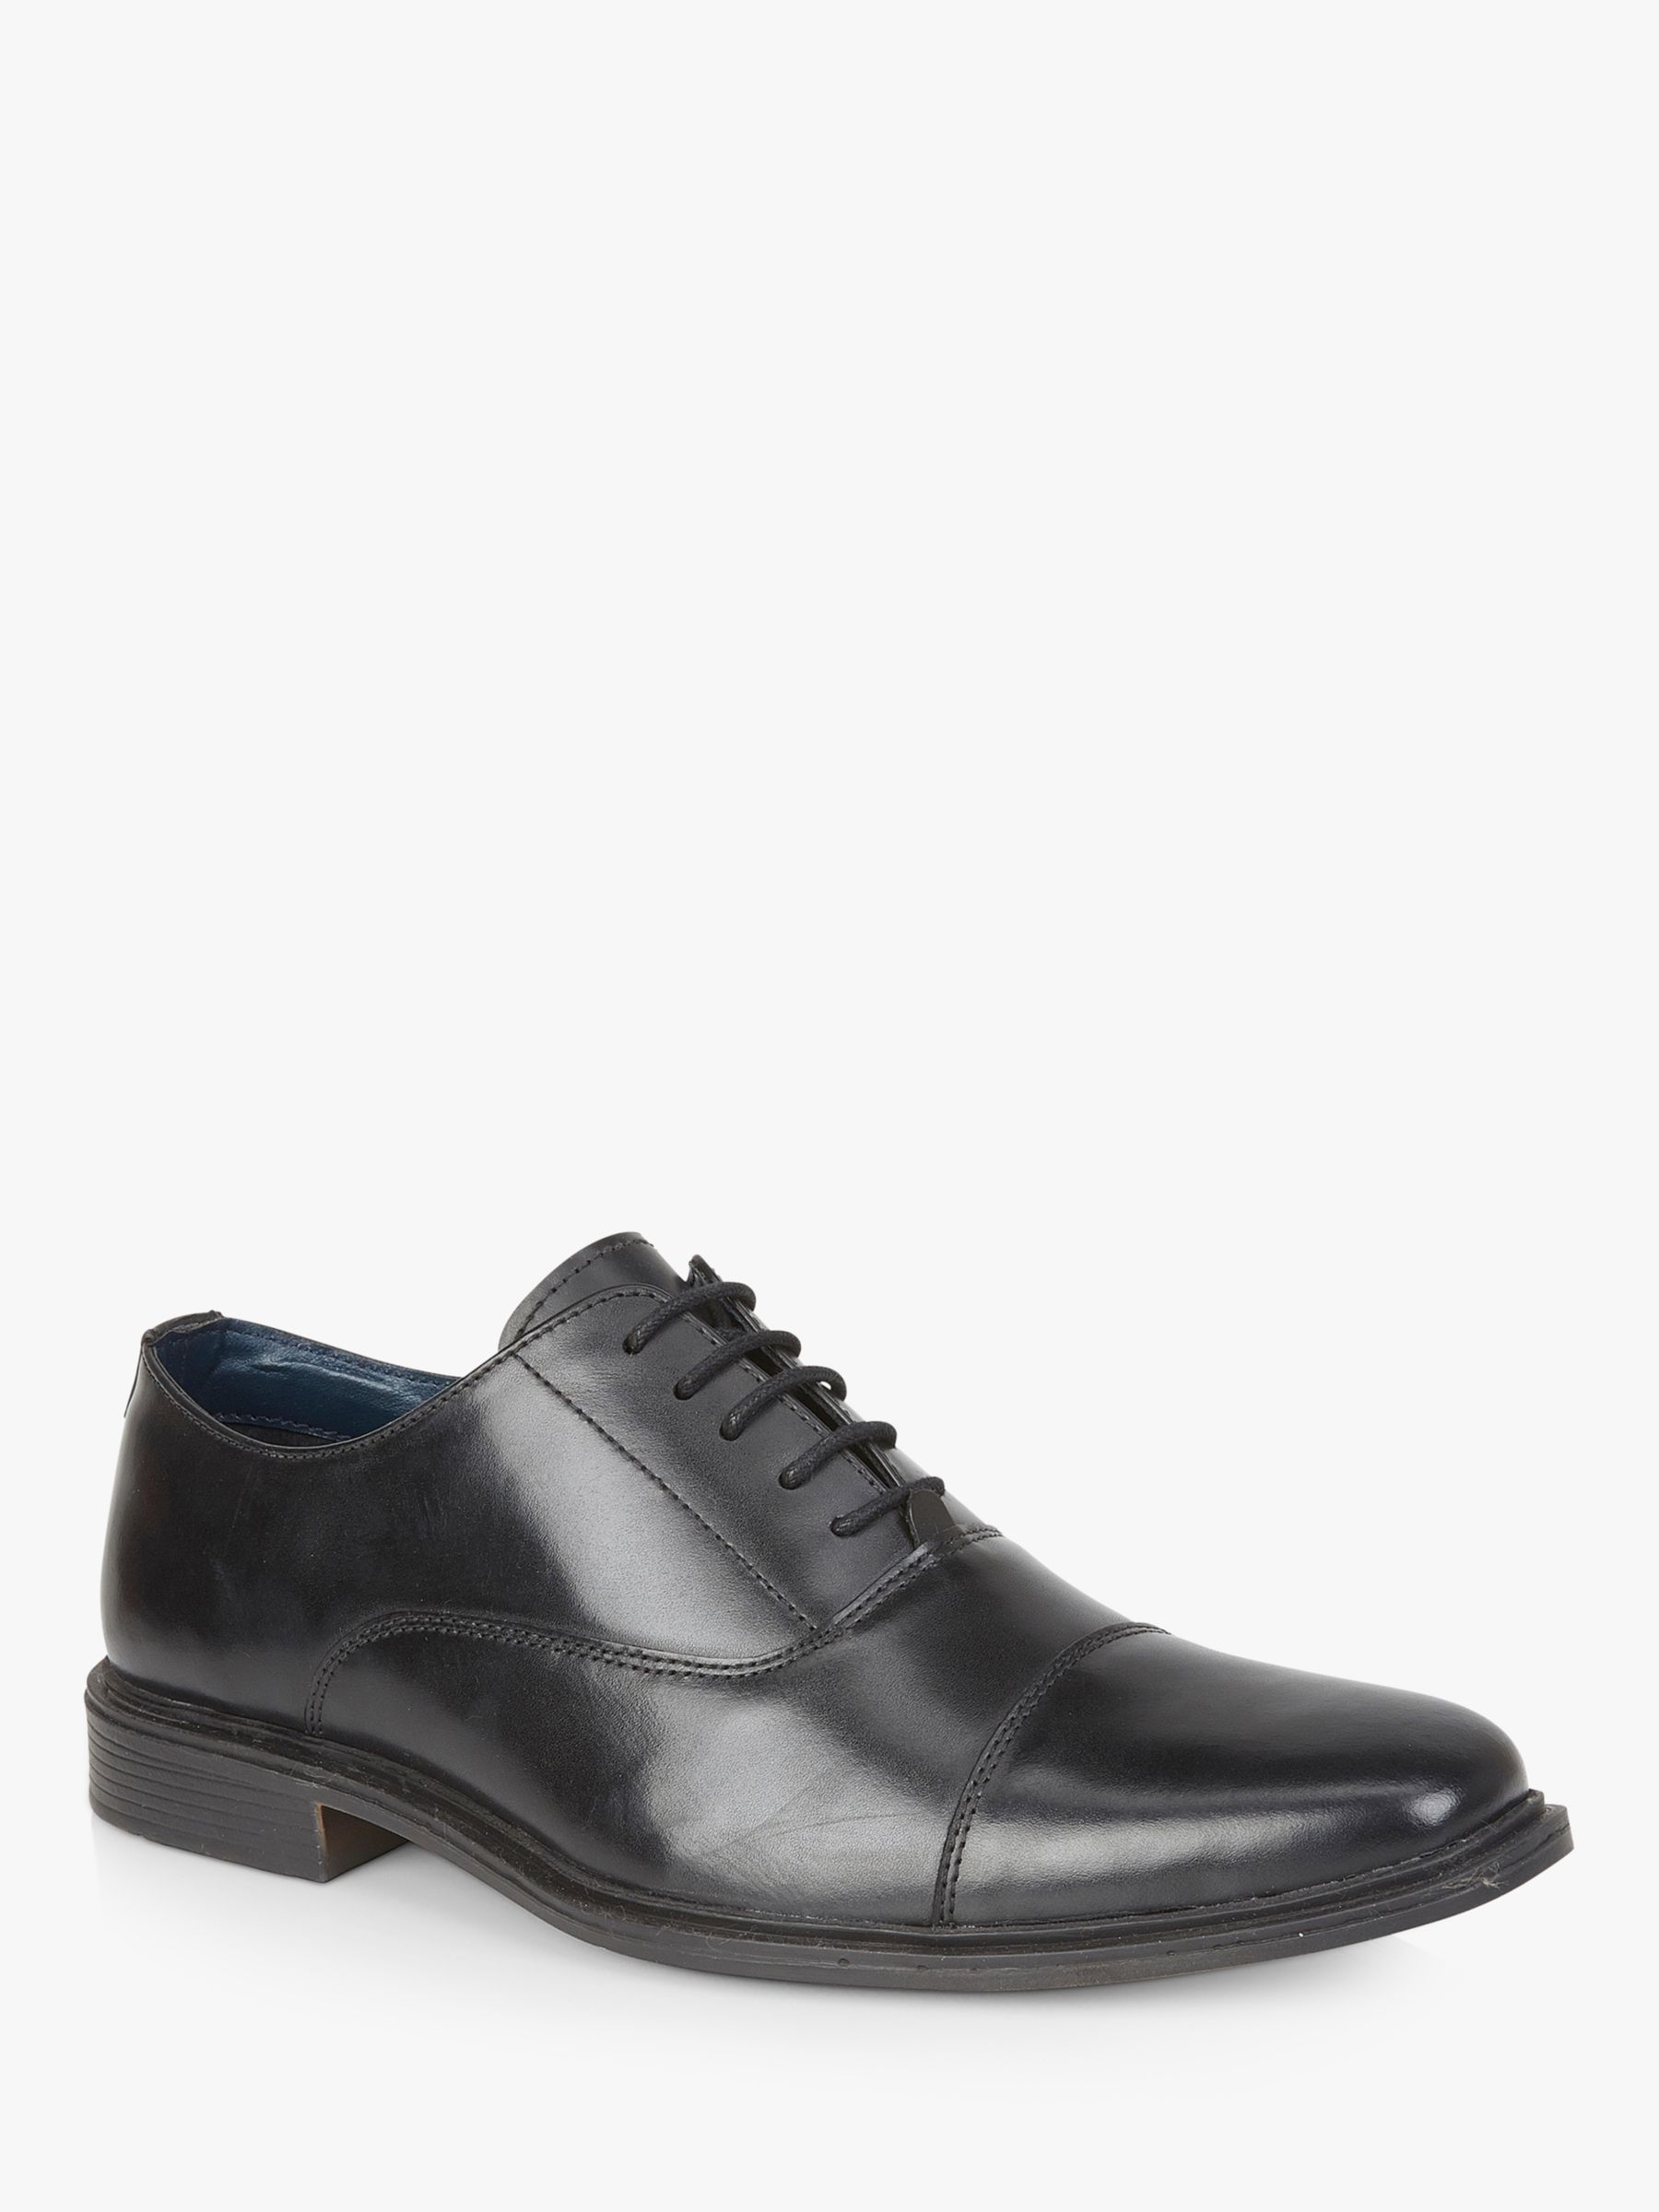 Silver Street London Burford Formal Derby Shoes, Black, 9